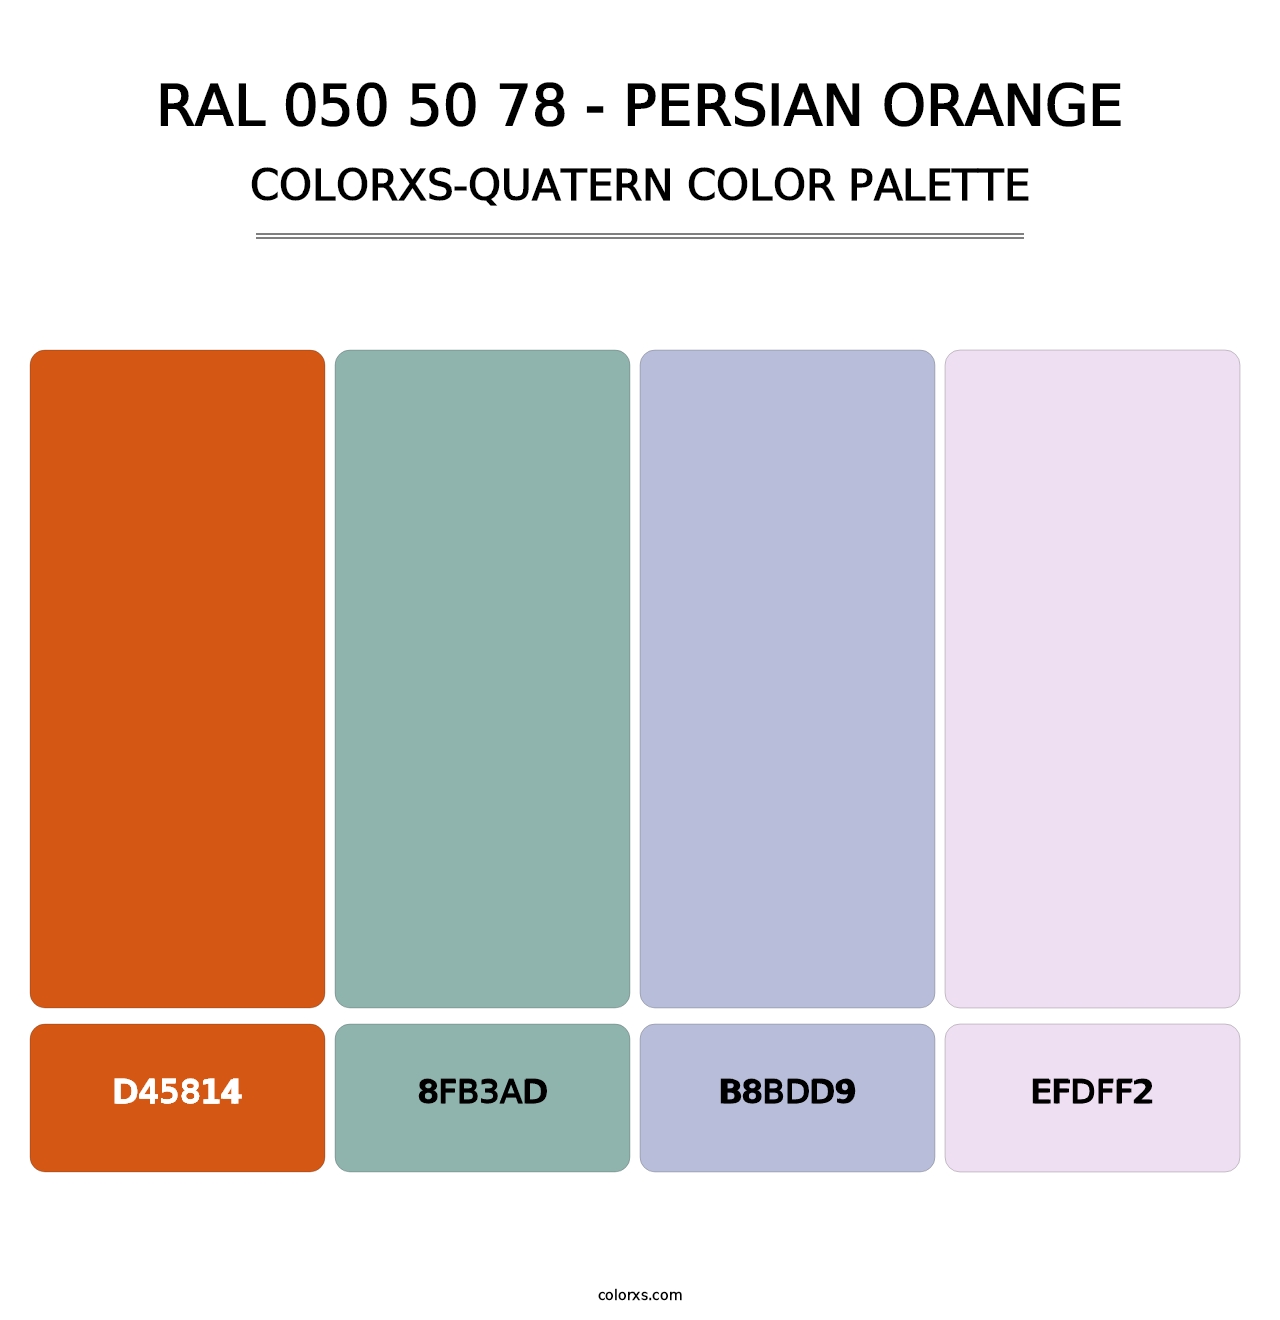 RAL 050 50 78 - Persian Orange - Colorxs Quatern Palette